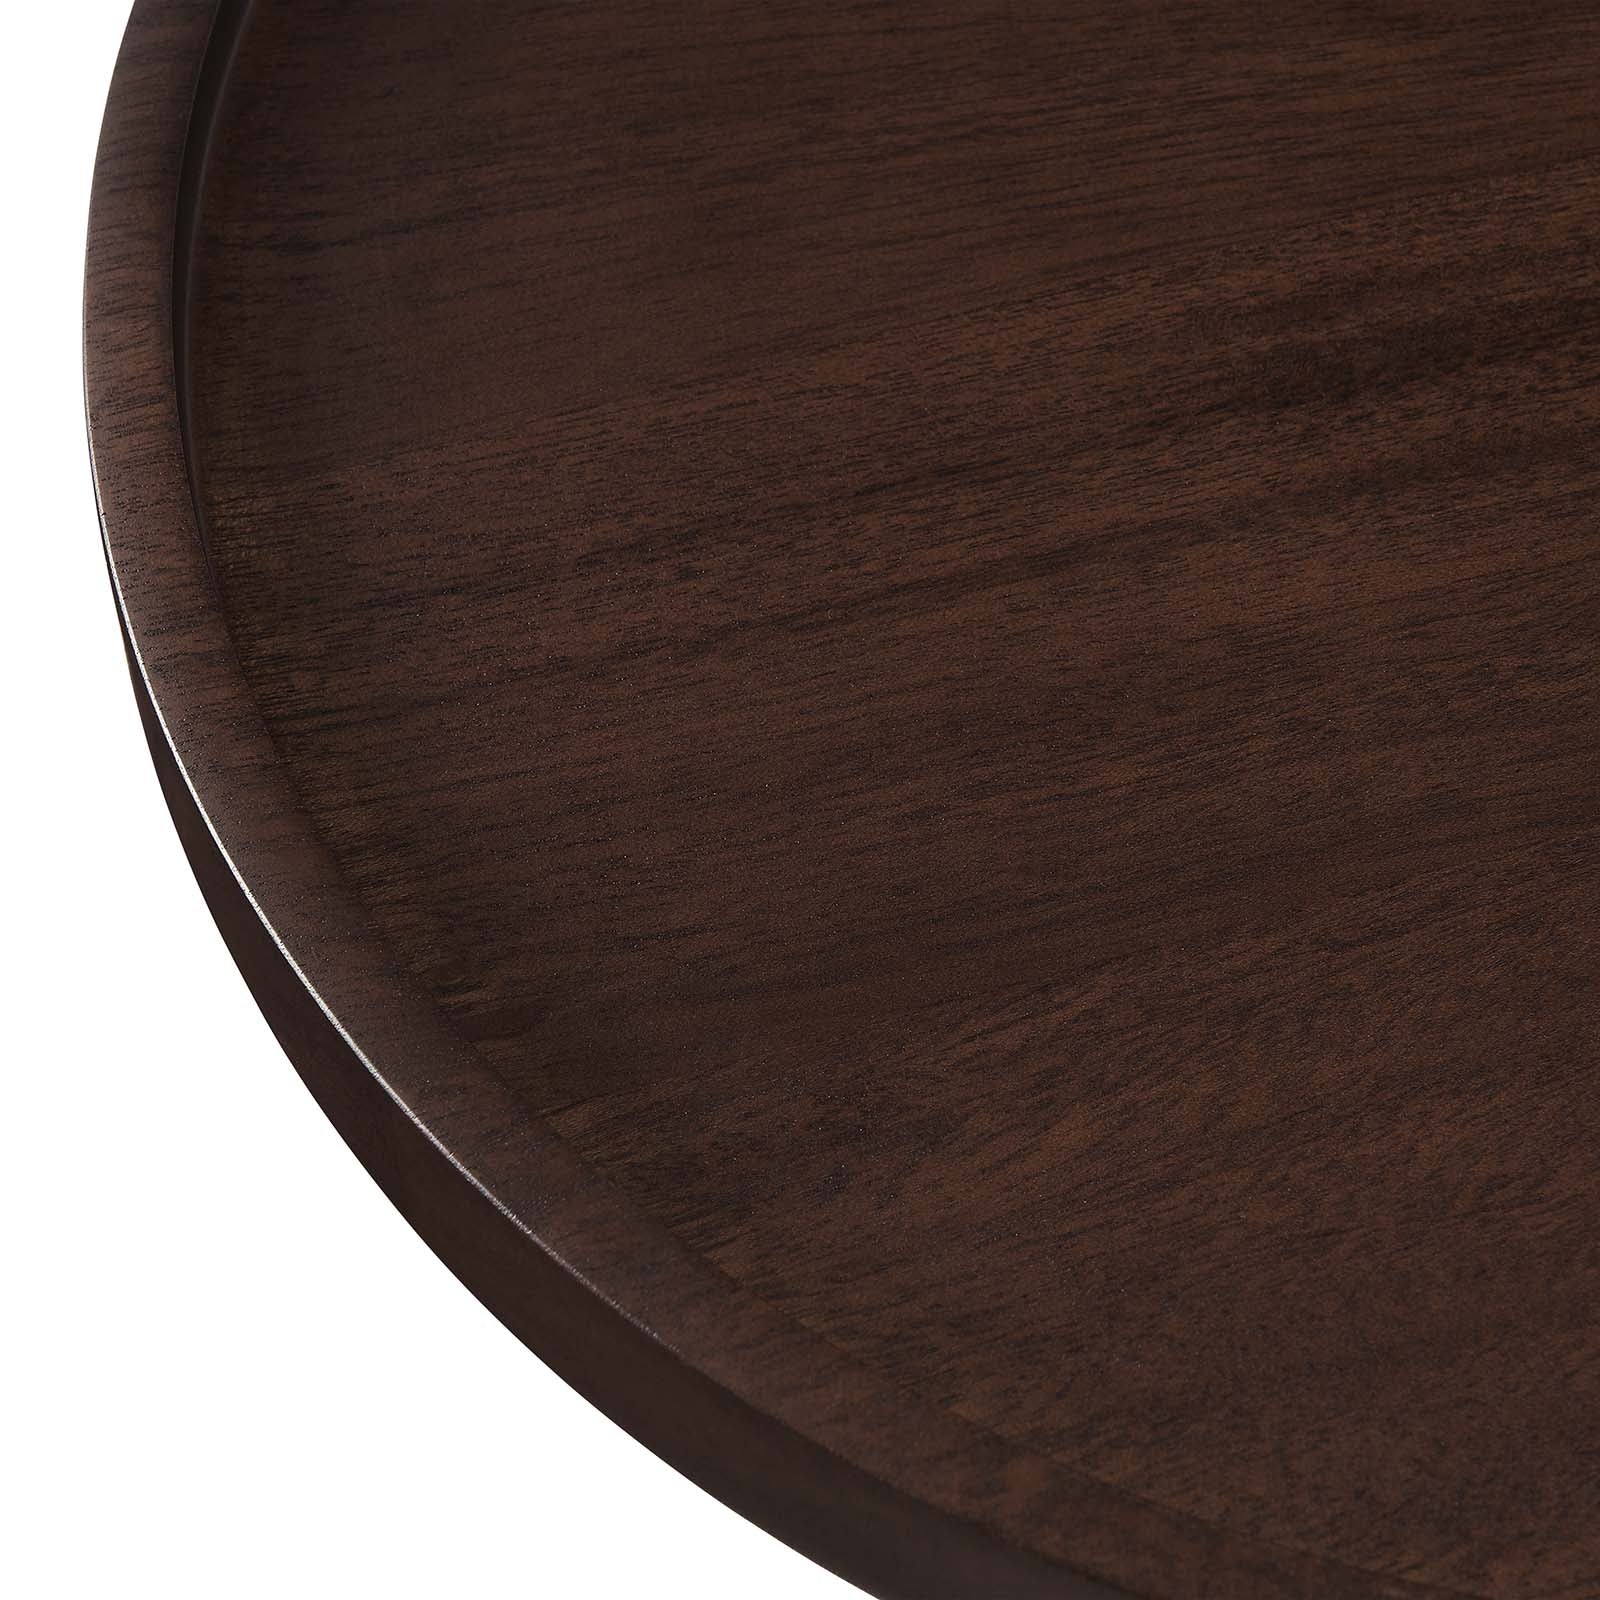 Amina Round Acacia Wood Side Table-Table-Modway-Wall2Wall Furnishings